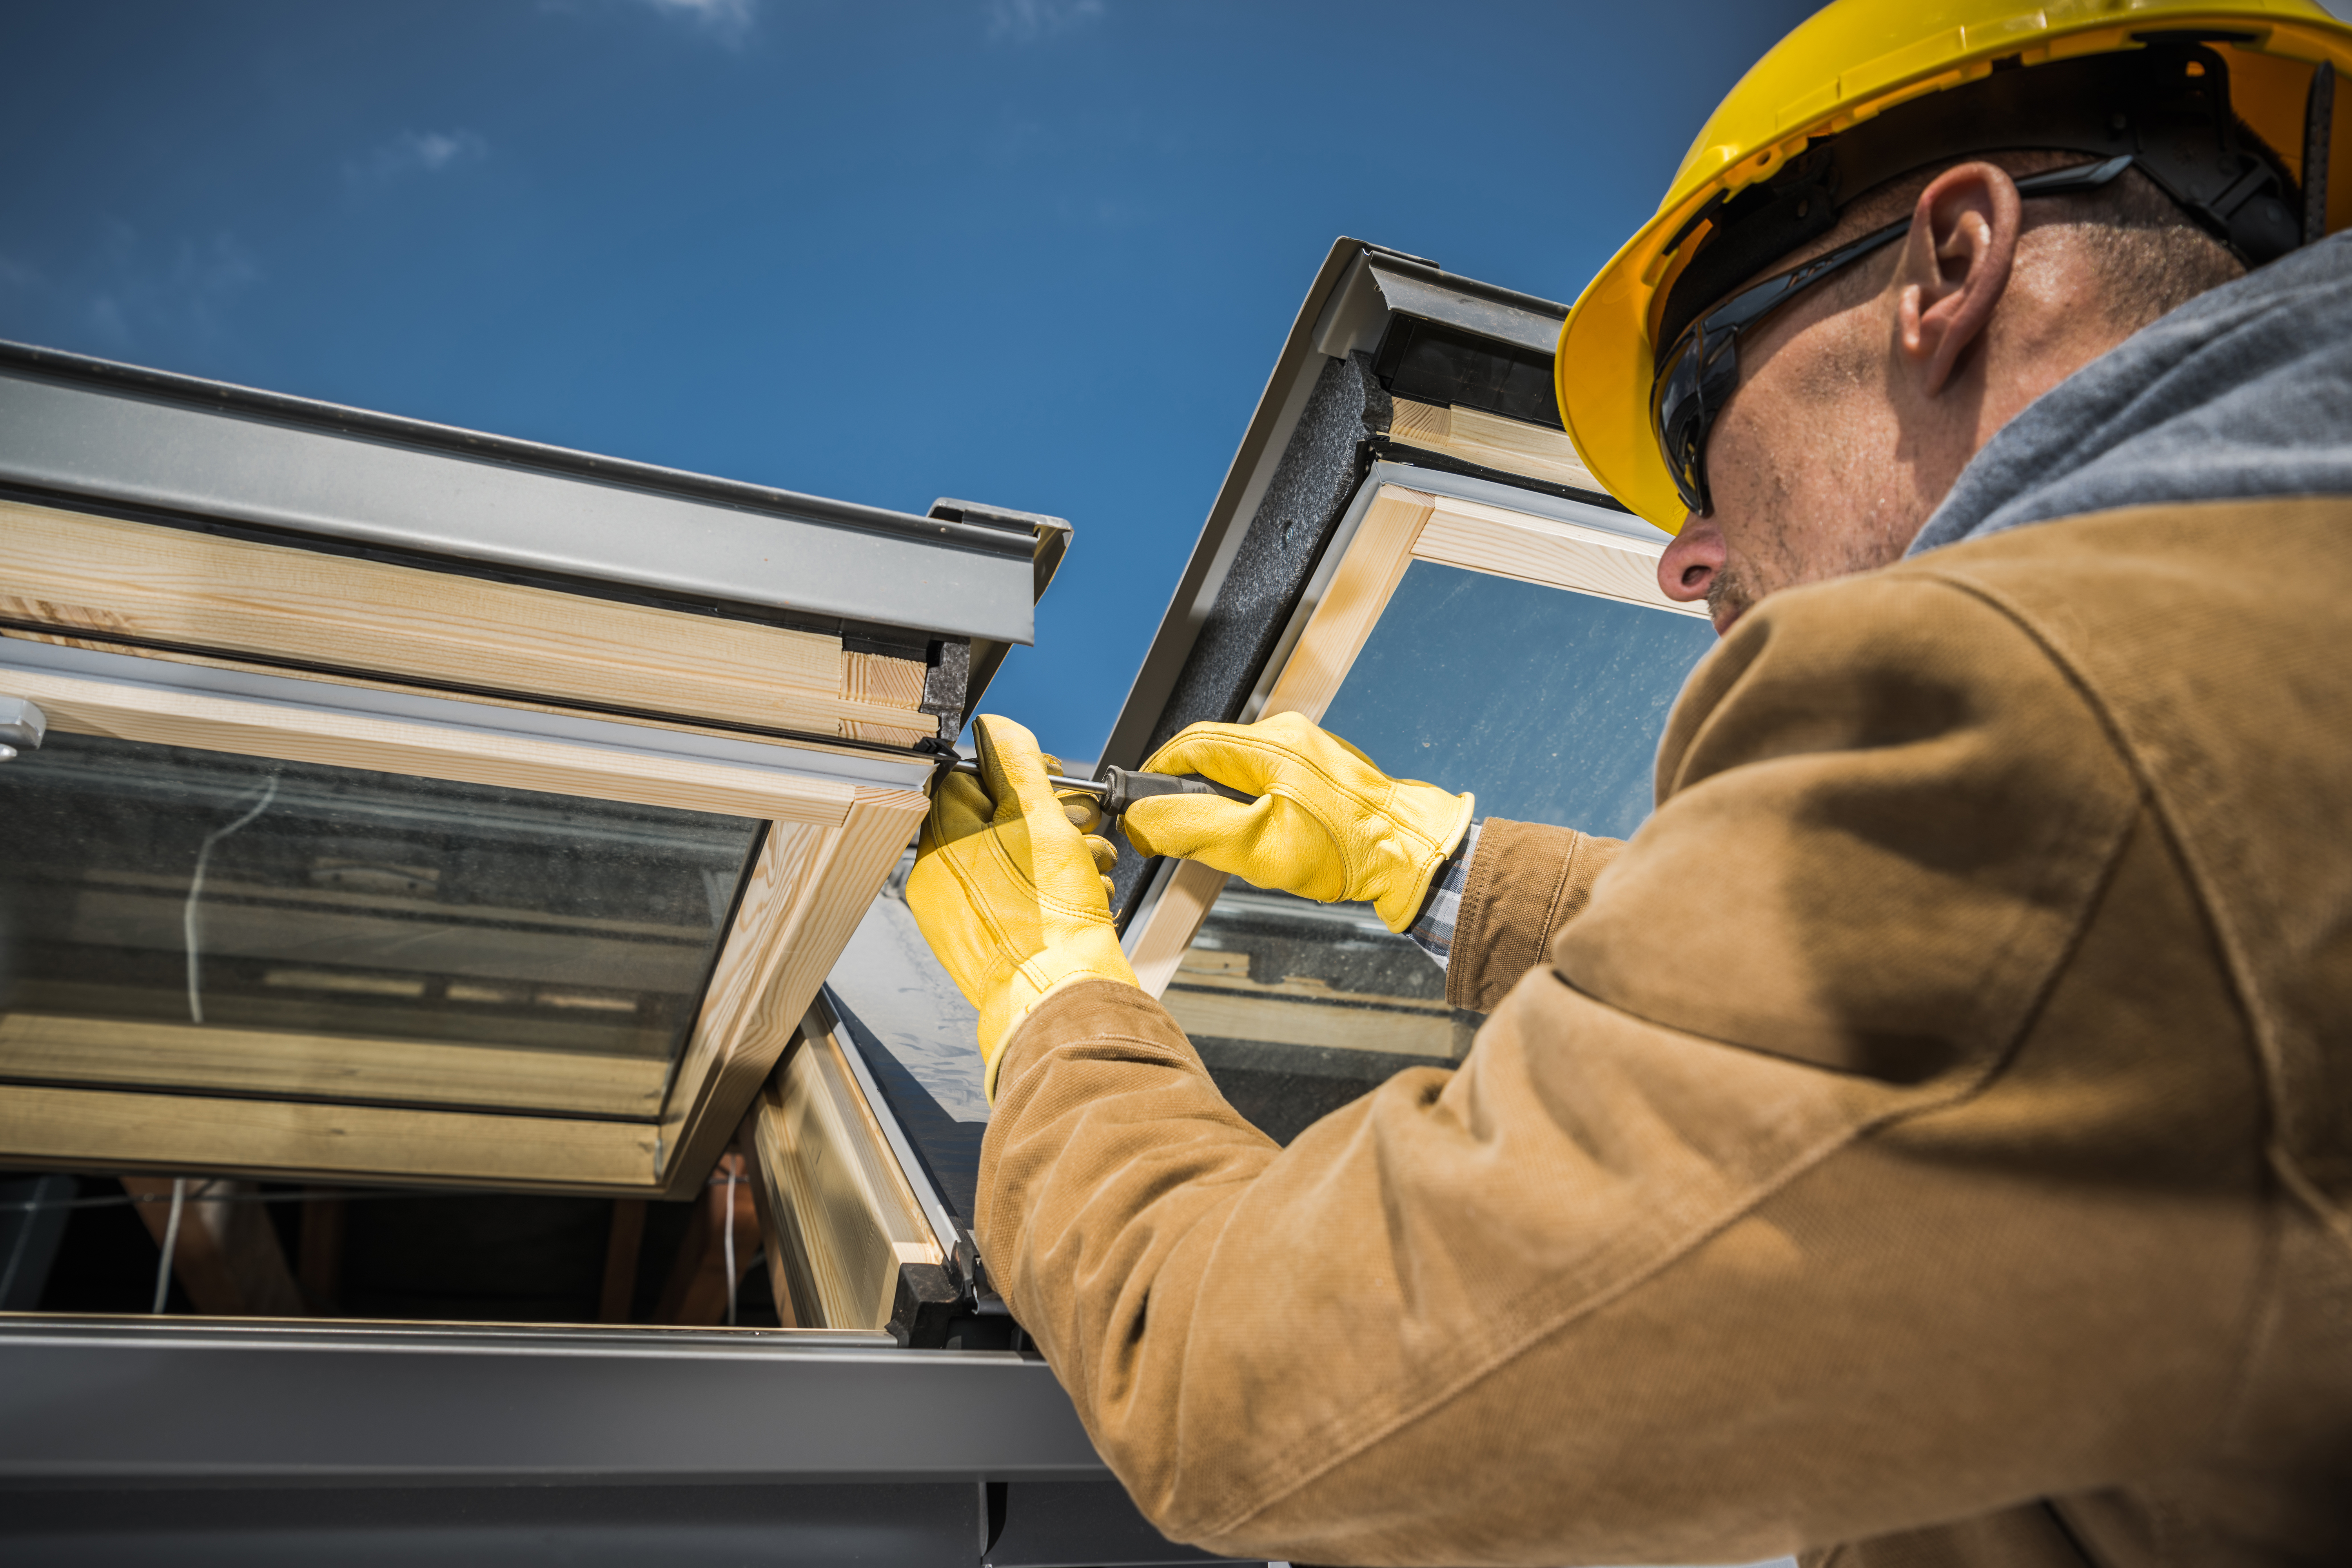 roof-windows-repair-and-maintenance-services-2022-12-16-11-48-28-utc.jpg